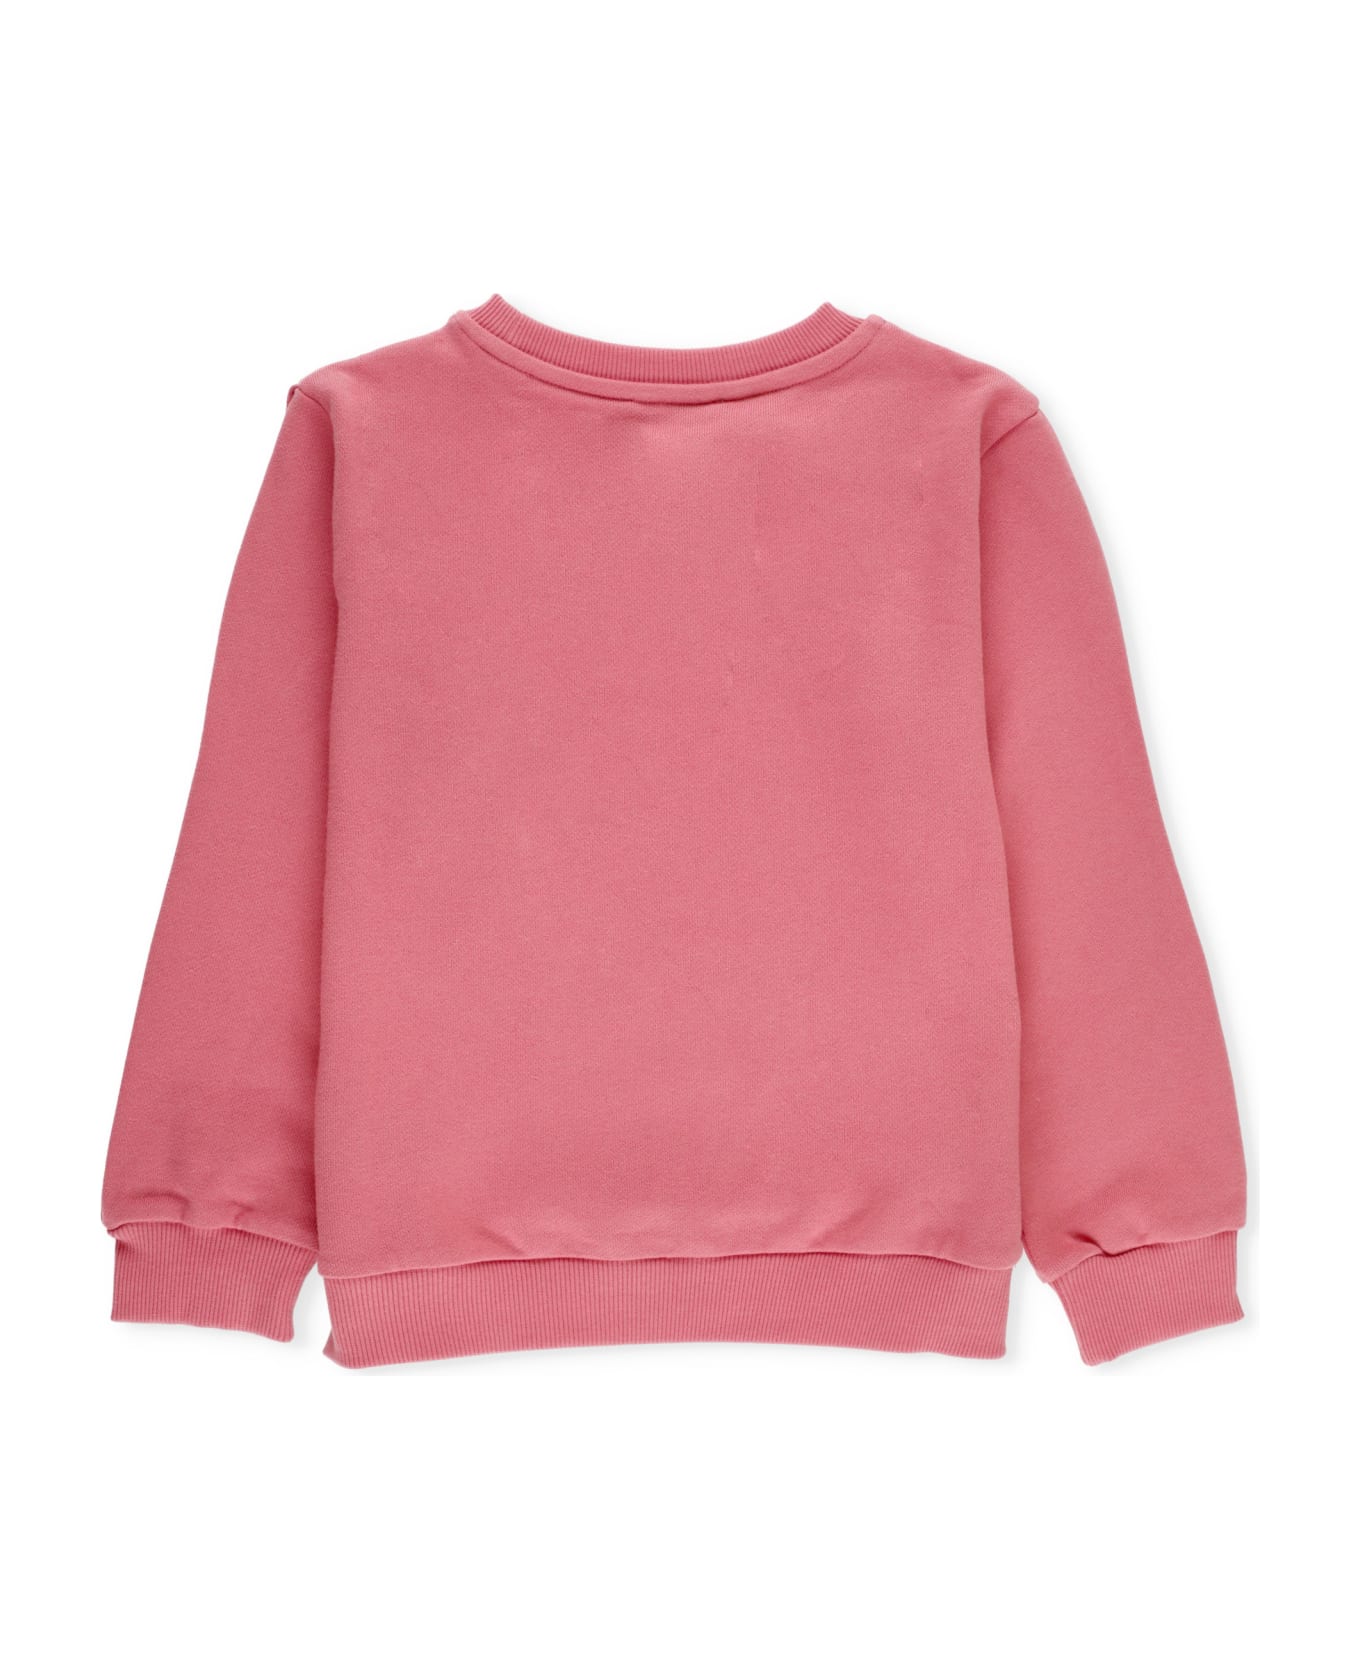 Balmain Logoed Sweater - Pink